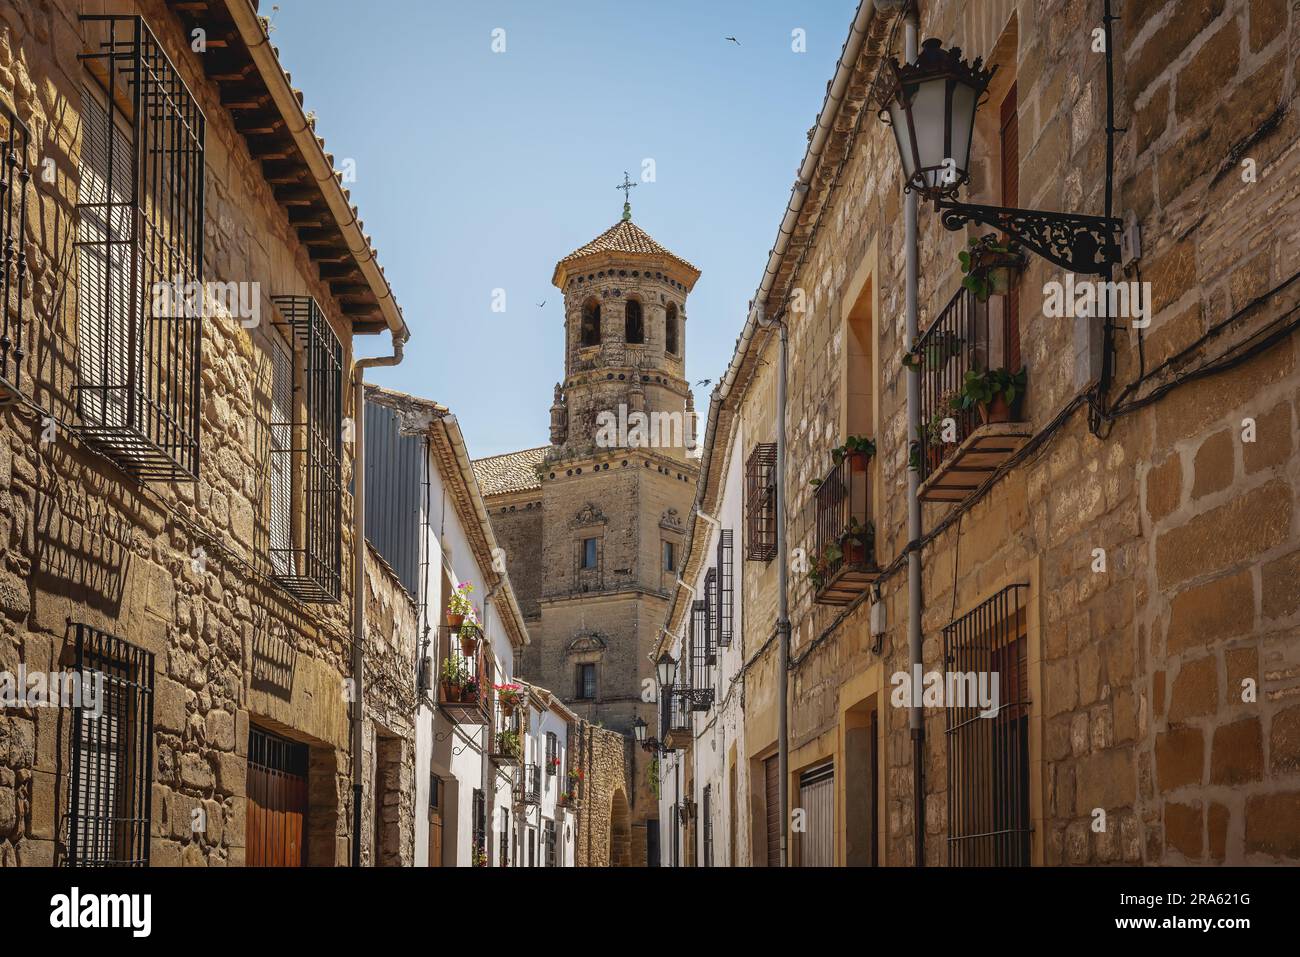 Baeza street with Old University Tower - Baeza, Jaen, Spain Stock Photo